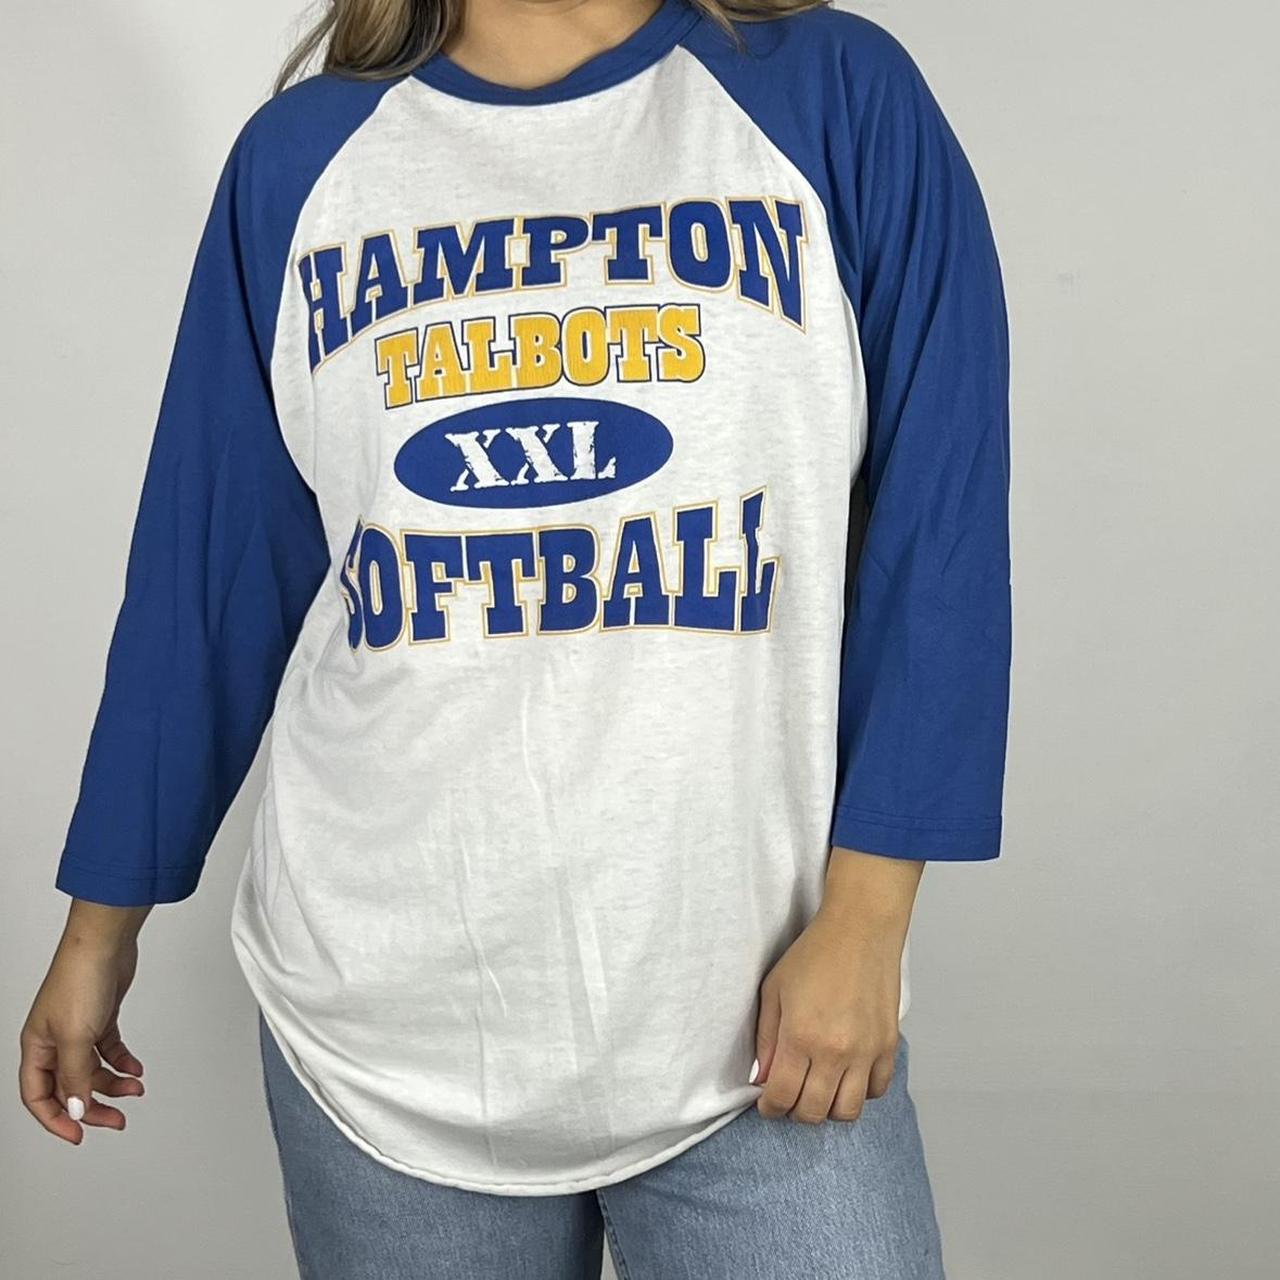 Vintage Baseball T-Shirts for Sale